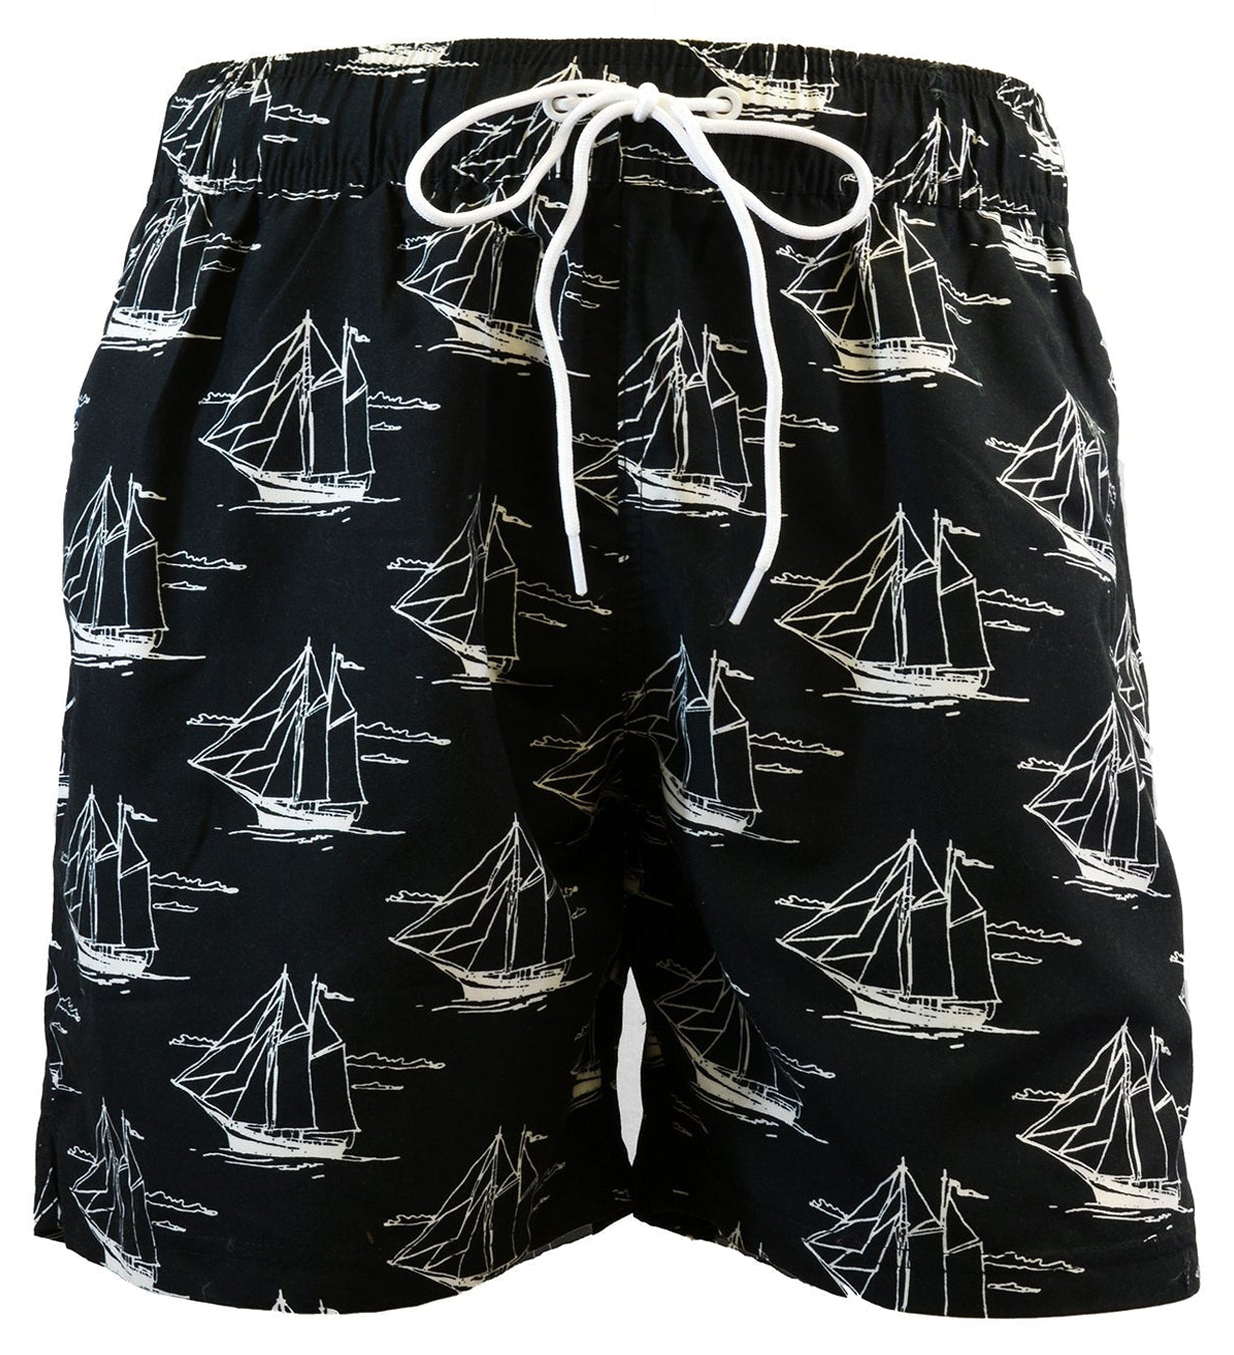 E195656 Adoretex Adult/Youth Sail Boat Printed Swim Board Shorts w/Mesh ...